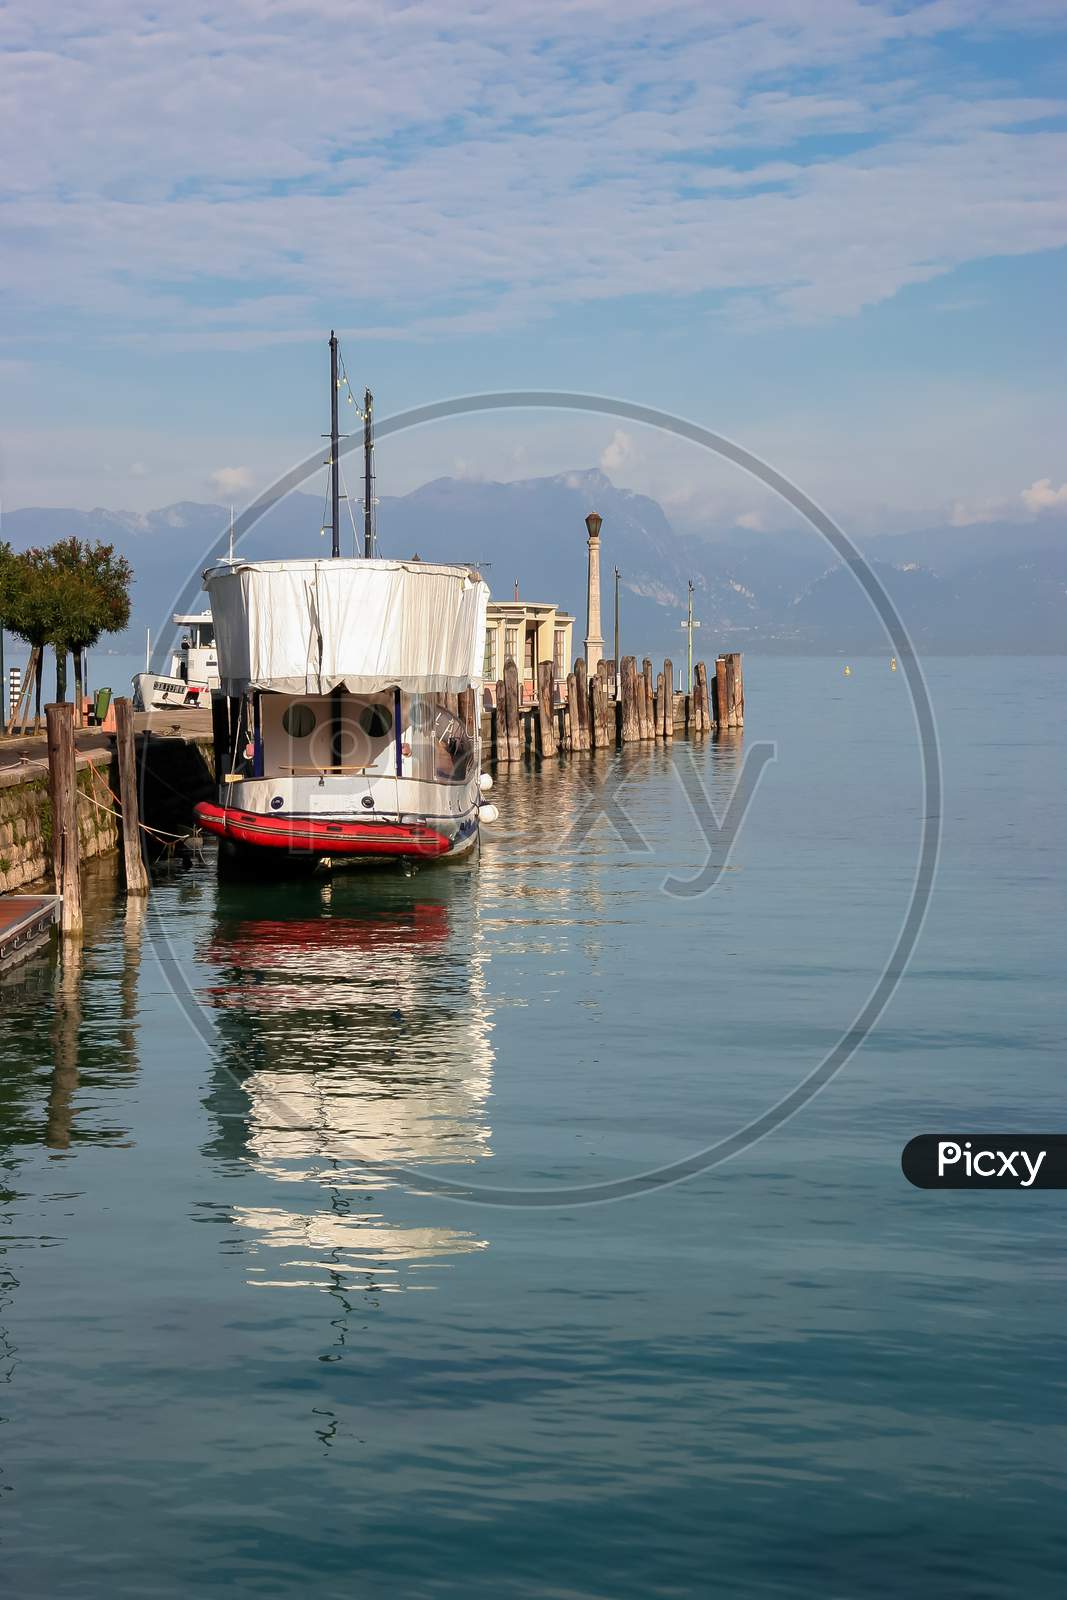 Lake Garda, Italy/Europe - October 25 : Pleasure Boat Moored At Lake Garda On October 25, 2006